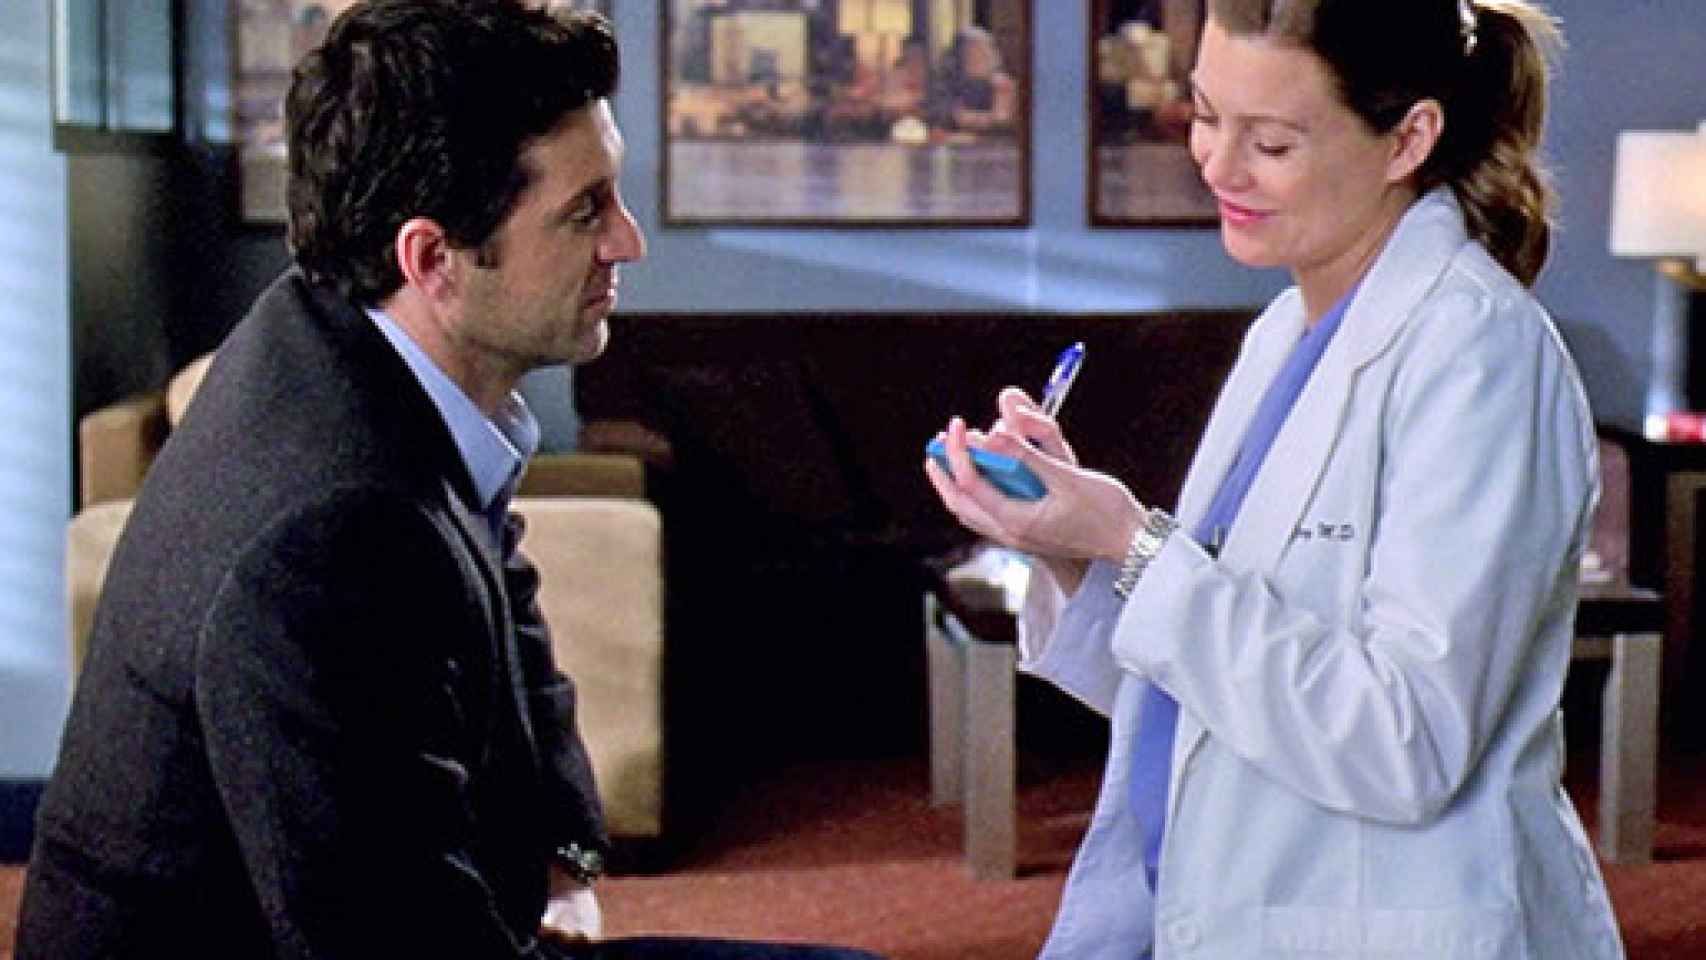 Derek y Meredith firman sus famosos votos matrimoniales.